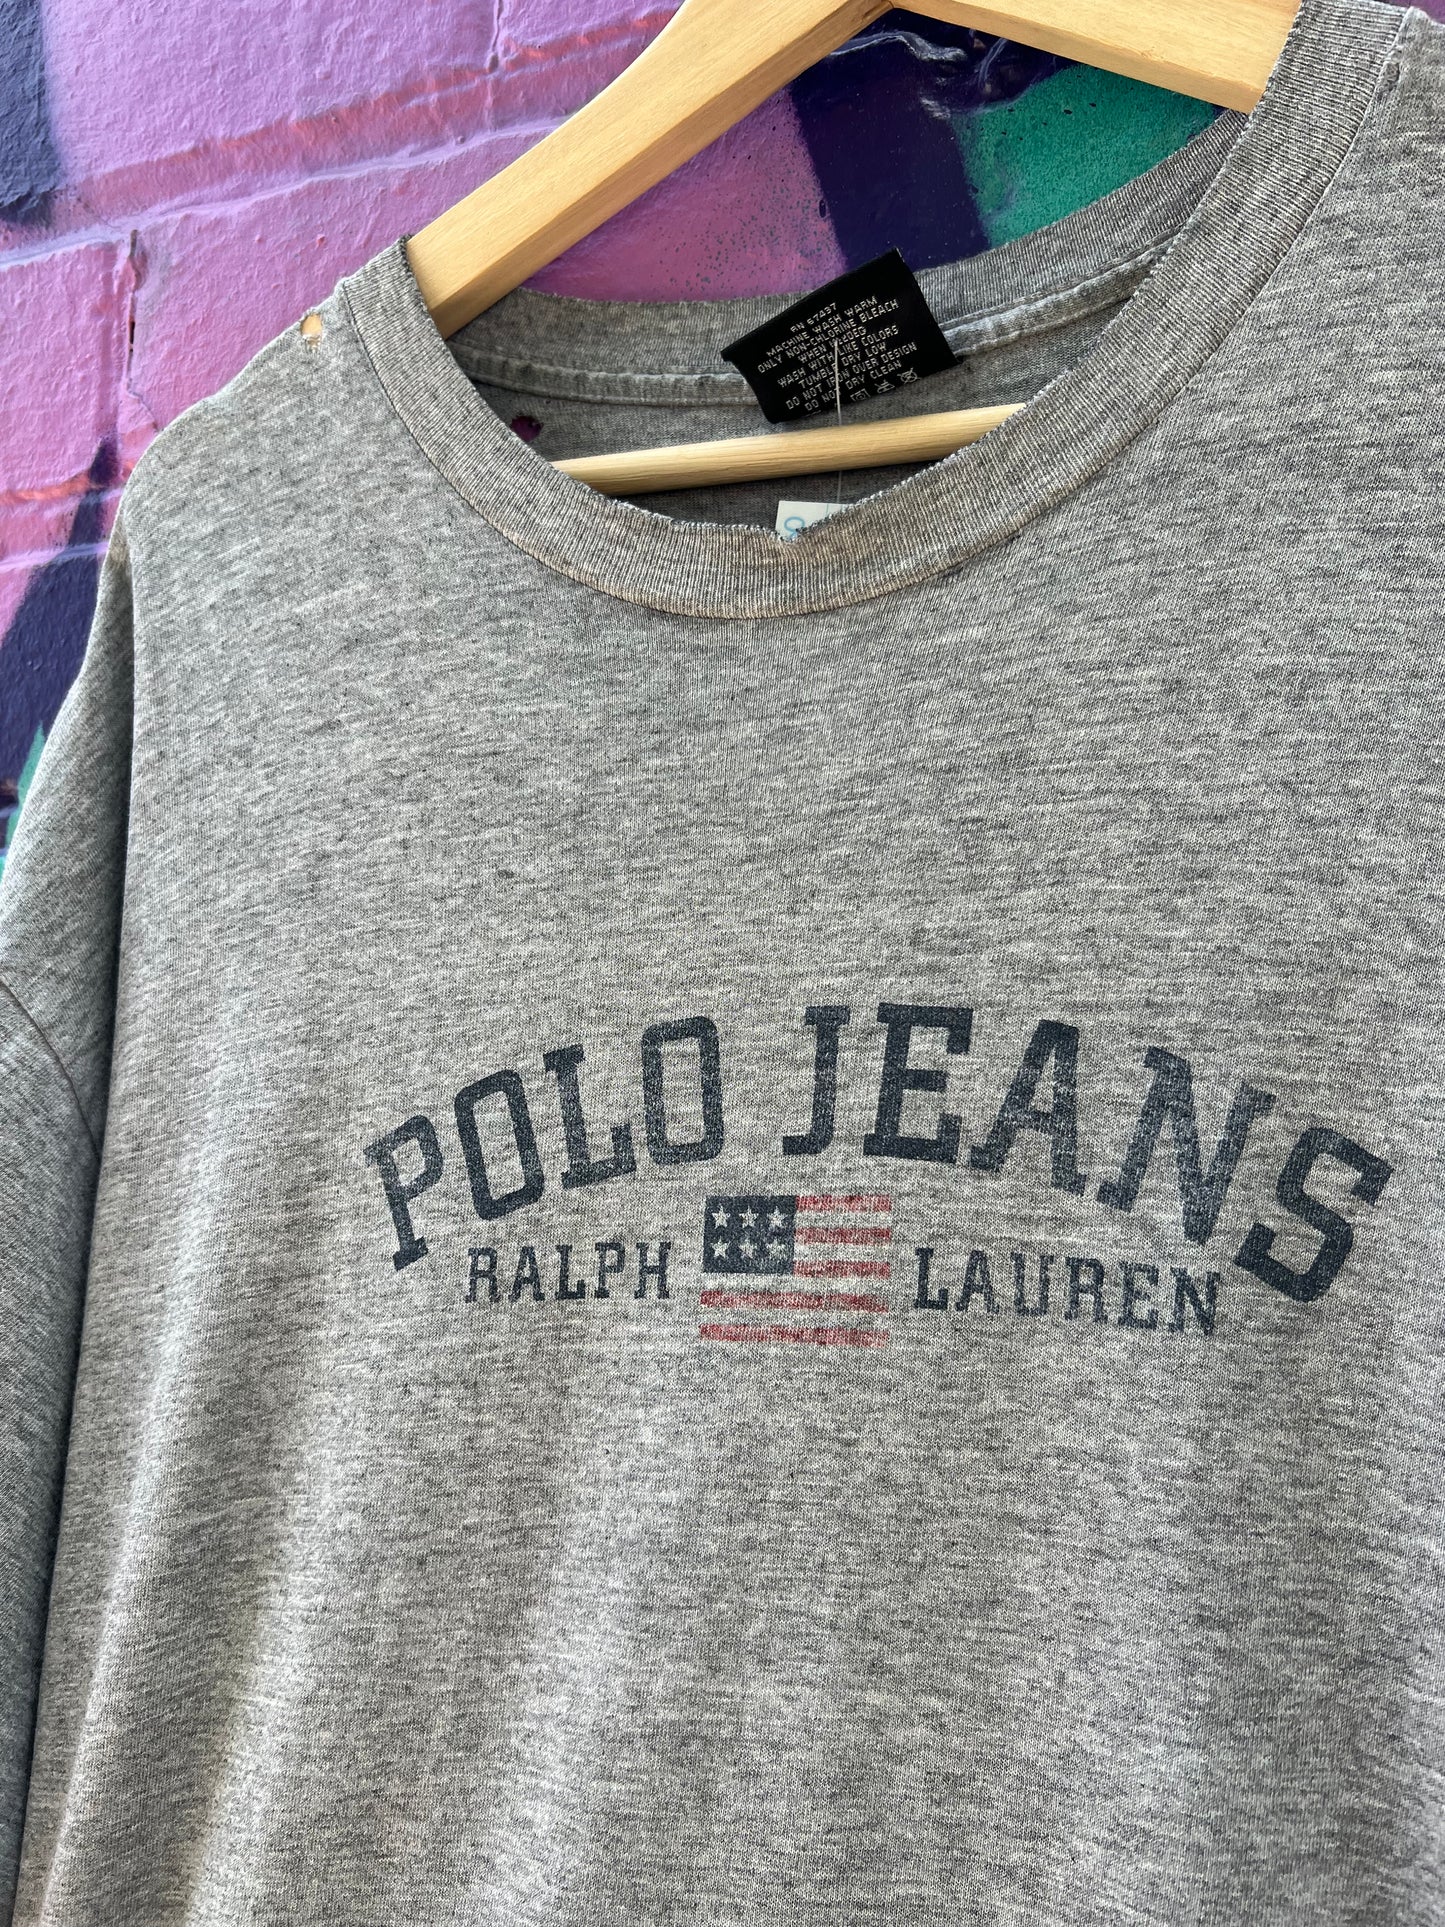 L - RL Polo Jeans Grey Tee